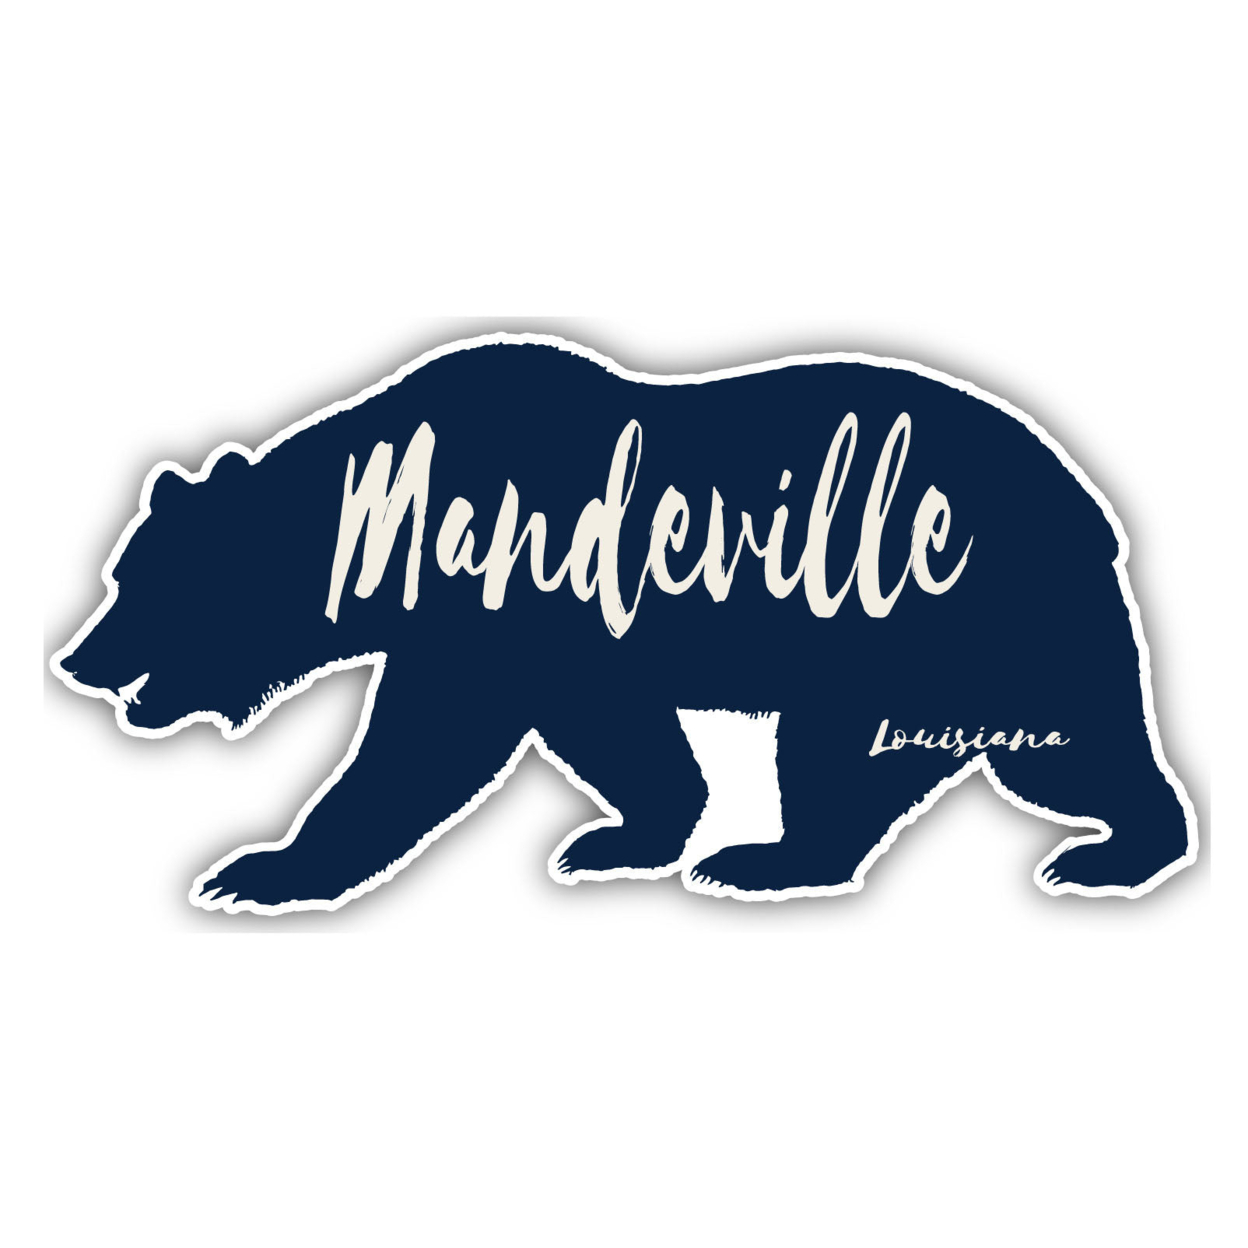 Mandeville Louisiana Souvenir Decorative Stickers (Choose Theme And Size) - 4-Inch, Tent